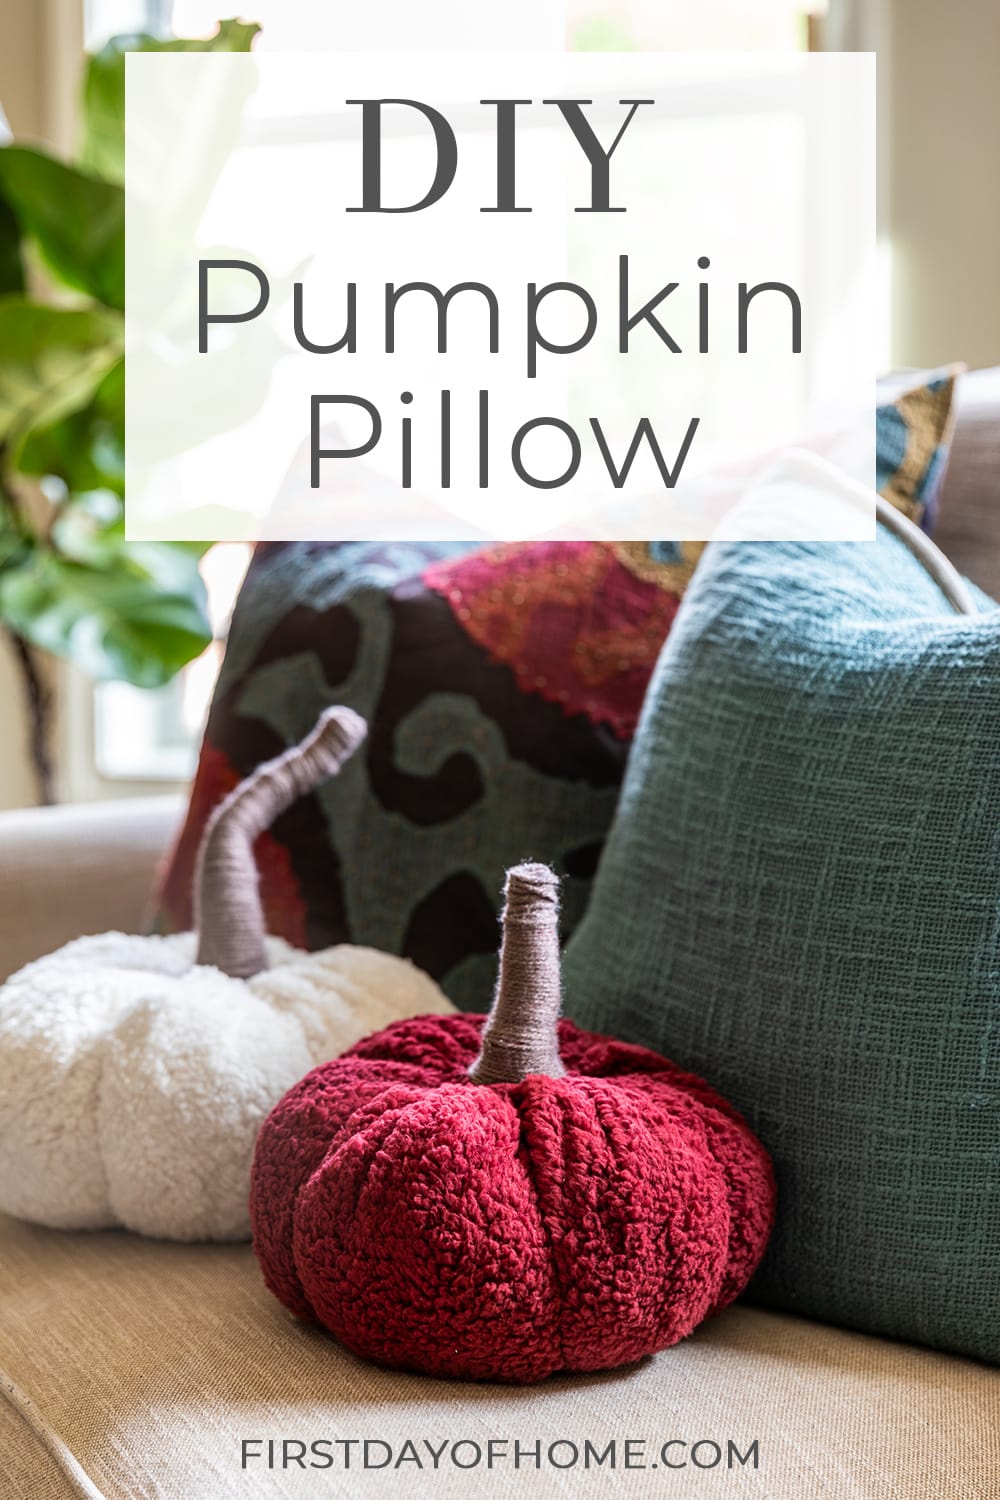 Pair of sherpa pumpkin pillows on sofa with throw pillows. Text overlay reads "DIY Pumpkin Pillow".